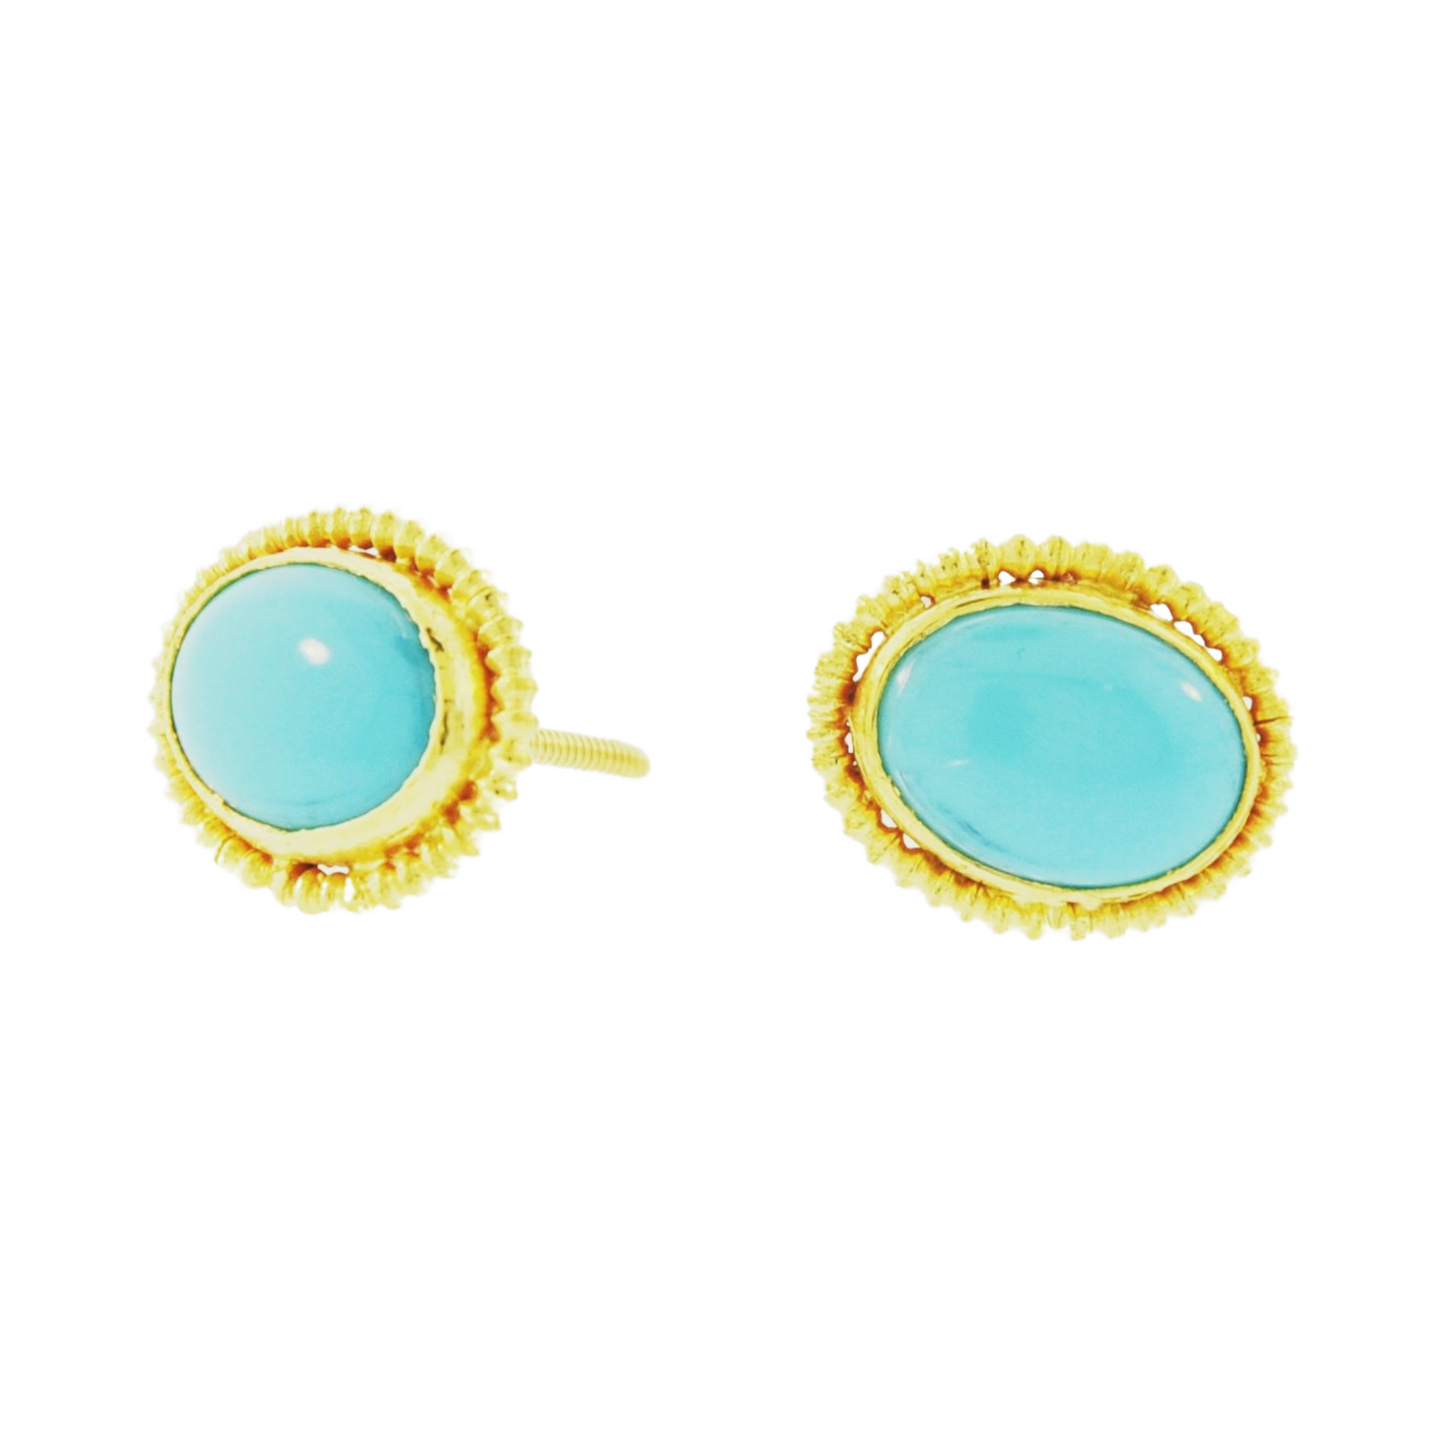 24KT Handmade Oval Shape Turquoise Earring